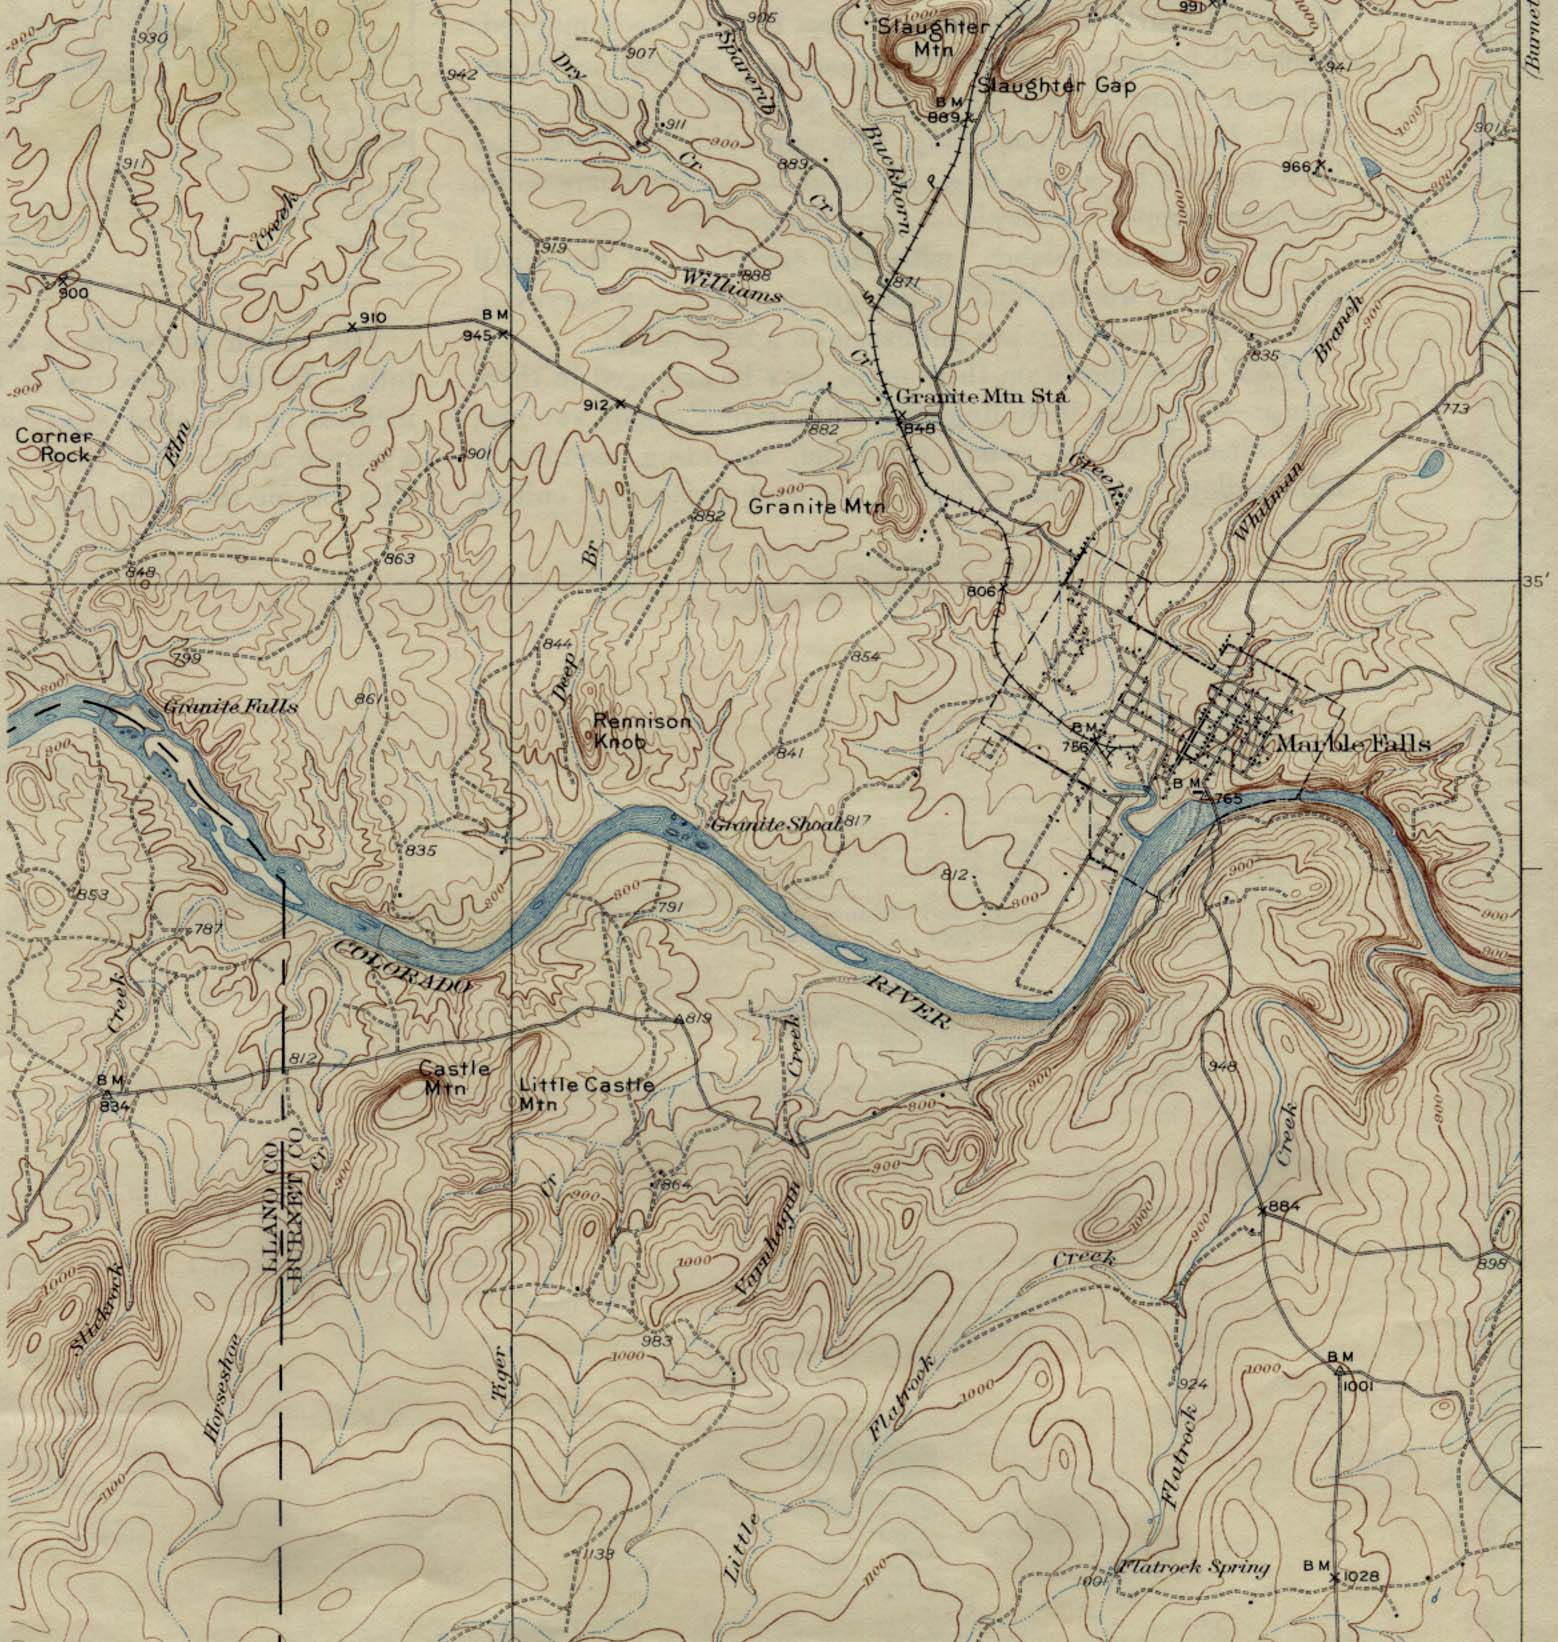 Historical Maps of U.S Cities. Marble Falls, Texas 1929 Original Scale 1:62,500 U.S. Geological Survey 1929. (389K) 